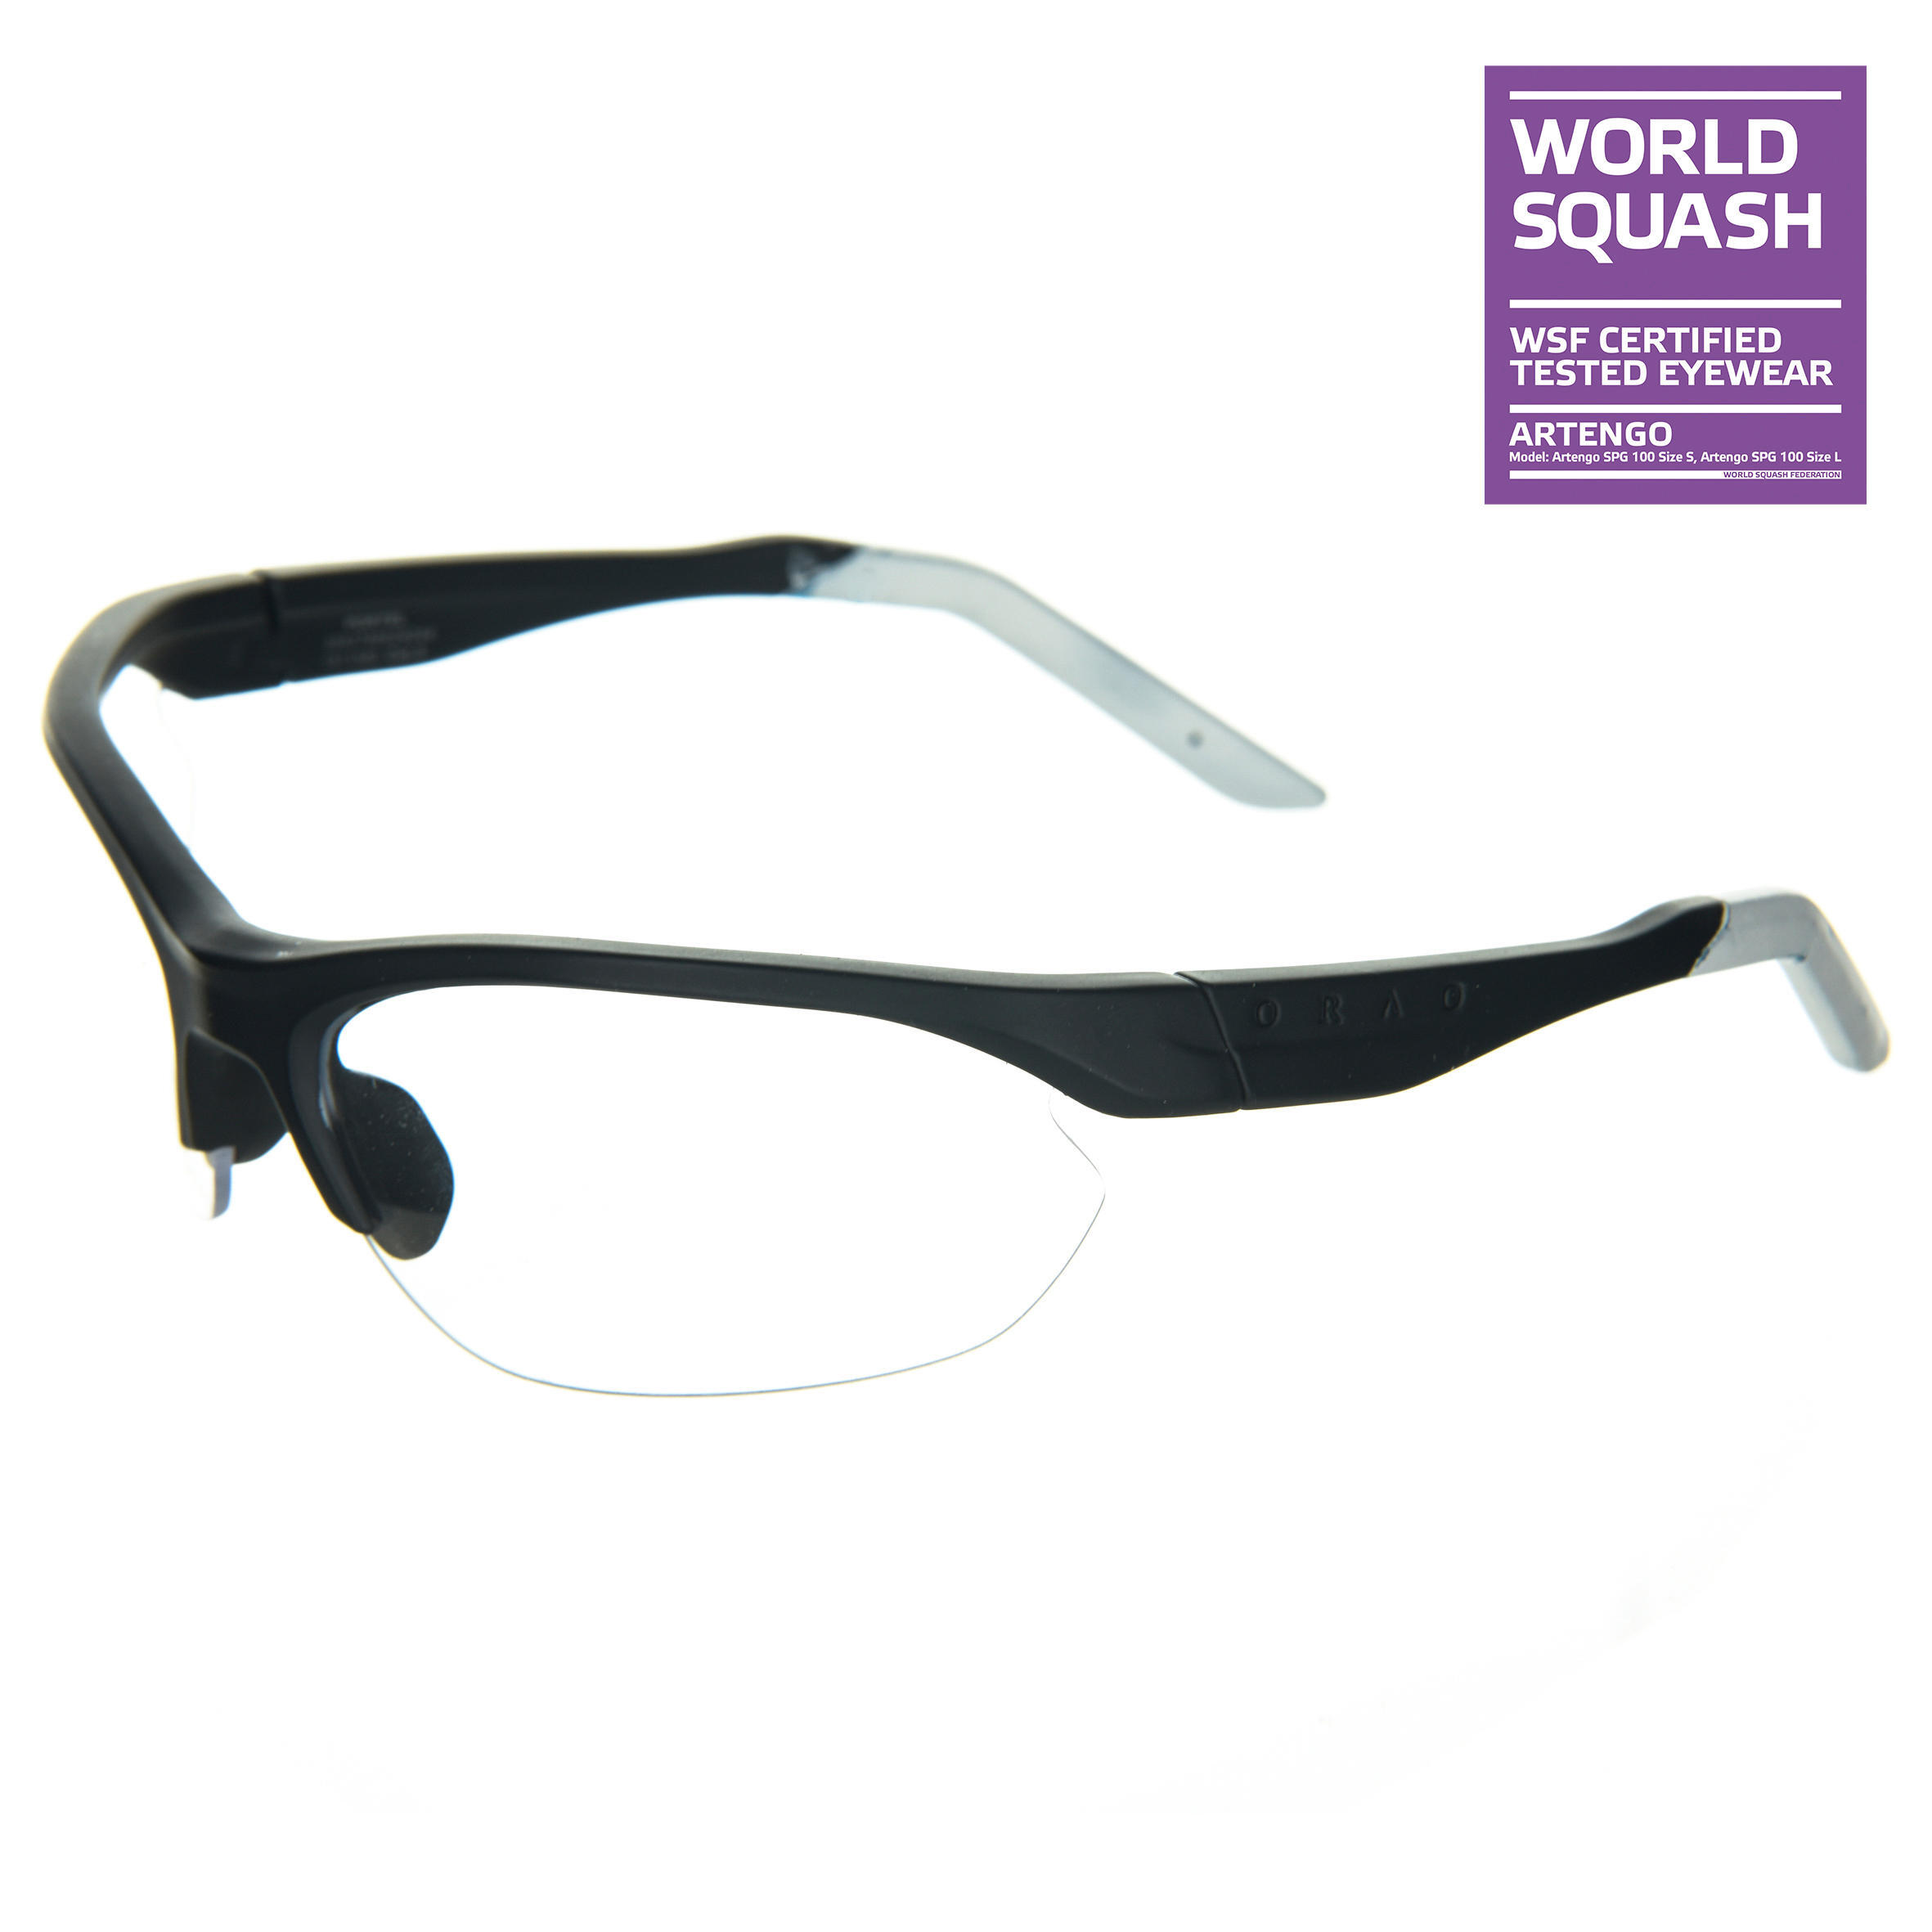 Squash Wide Face Glasses SPG 100 - Size L 1/6